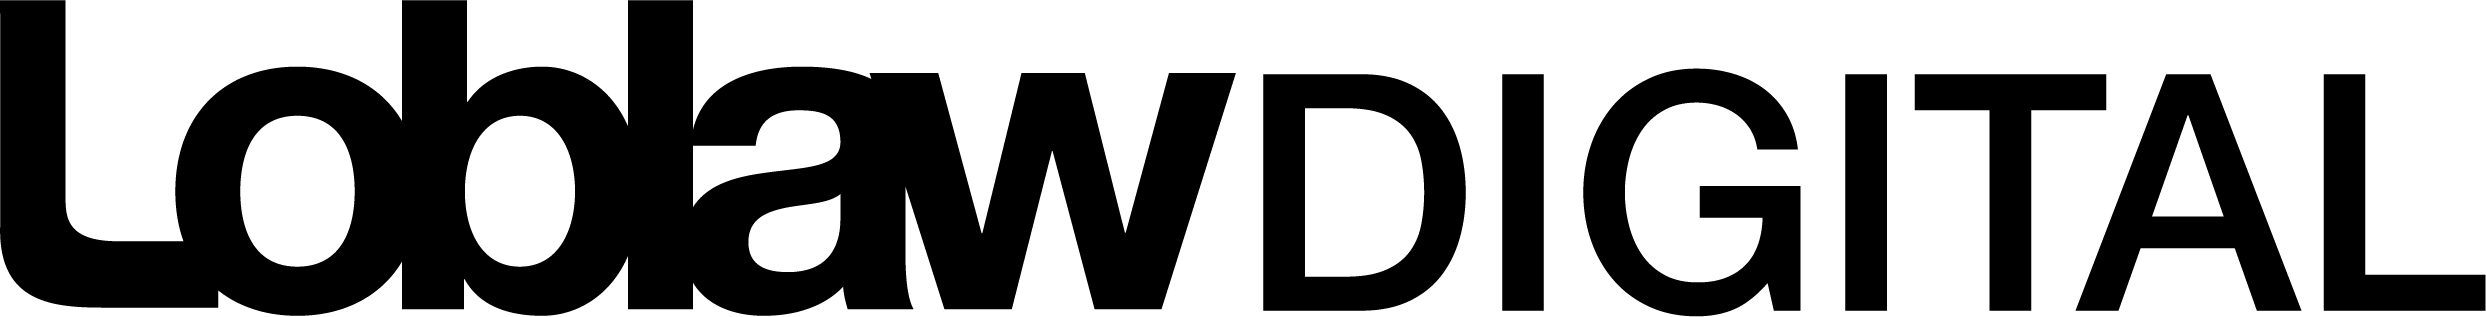 Lowblaw Digital logo